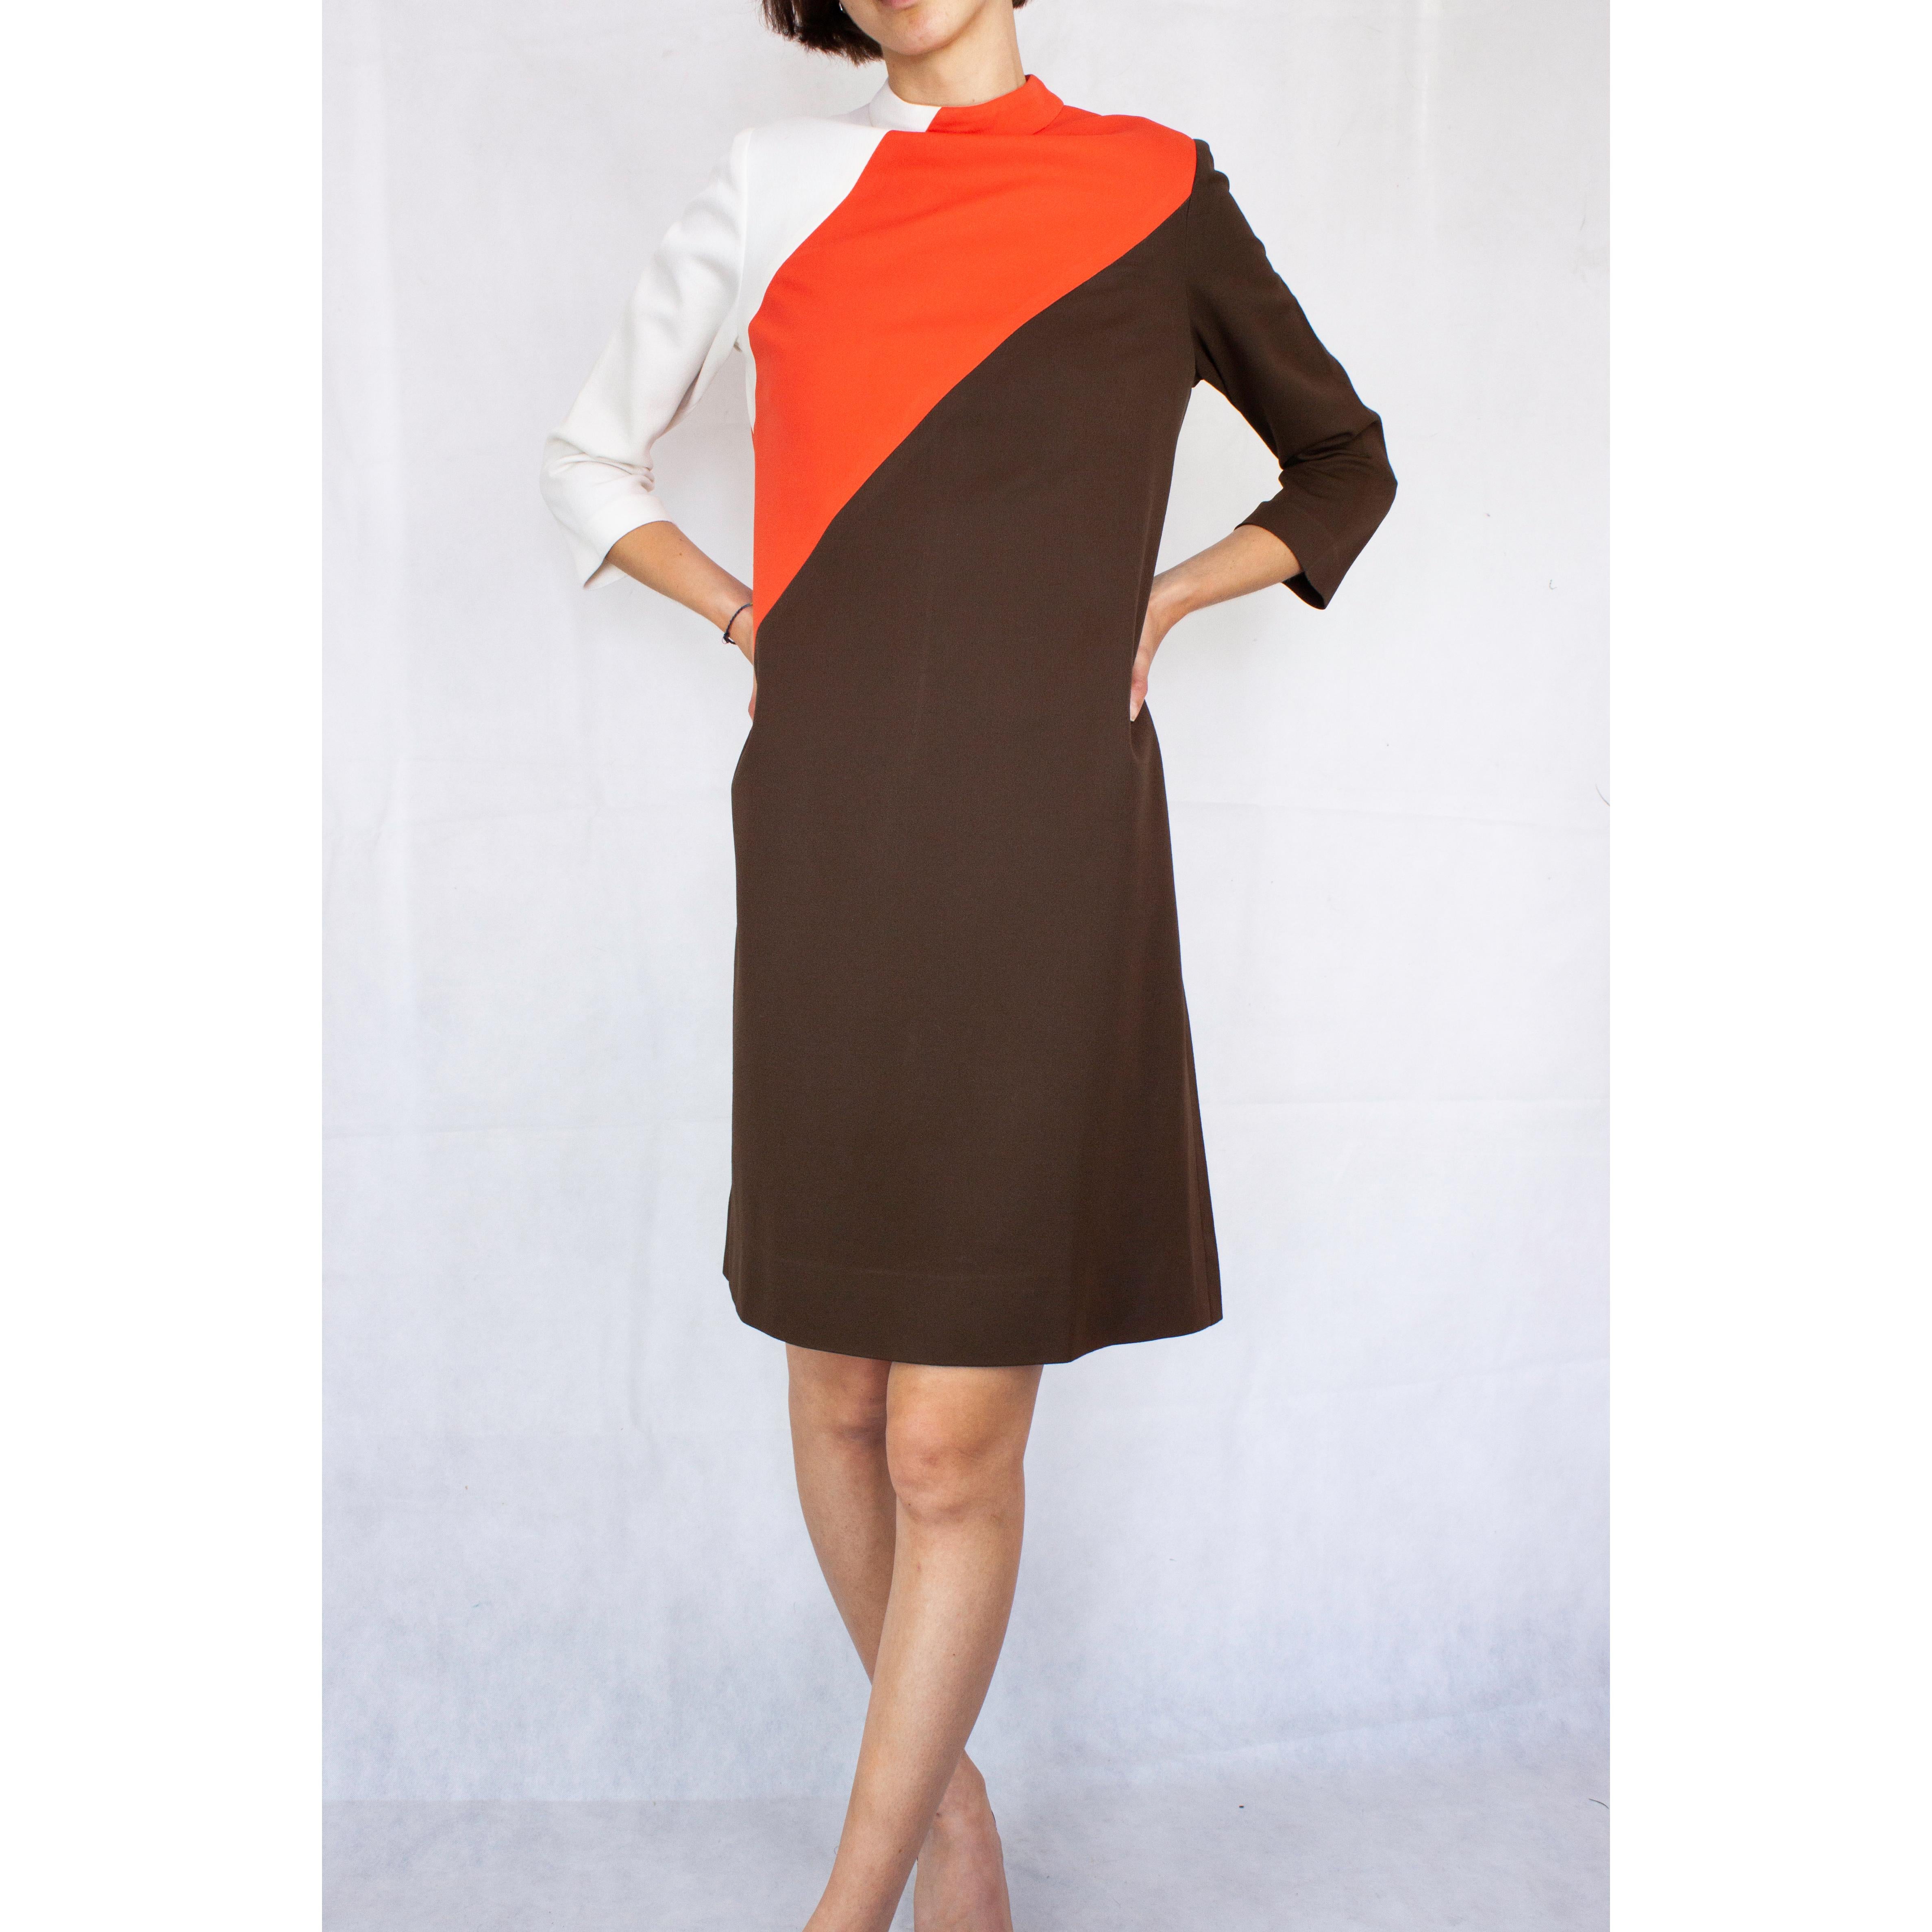 Pierre Cardin colour-block jersey dress. circa 1960s 1